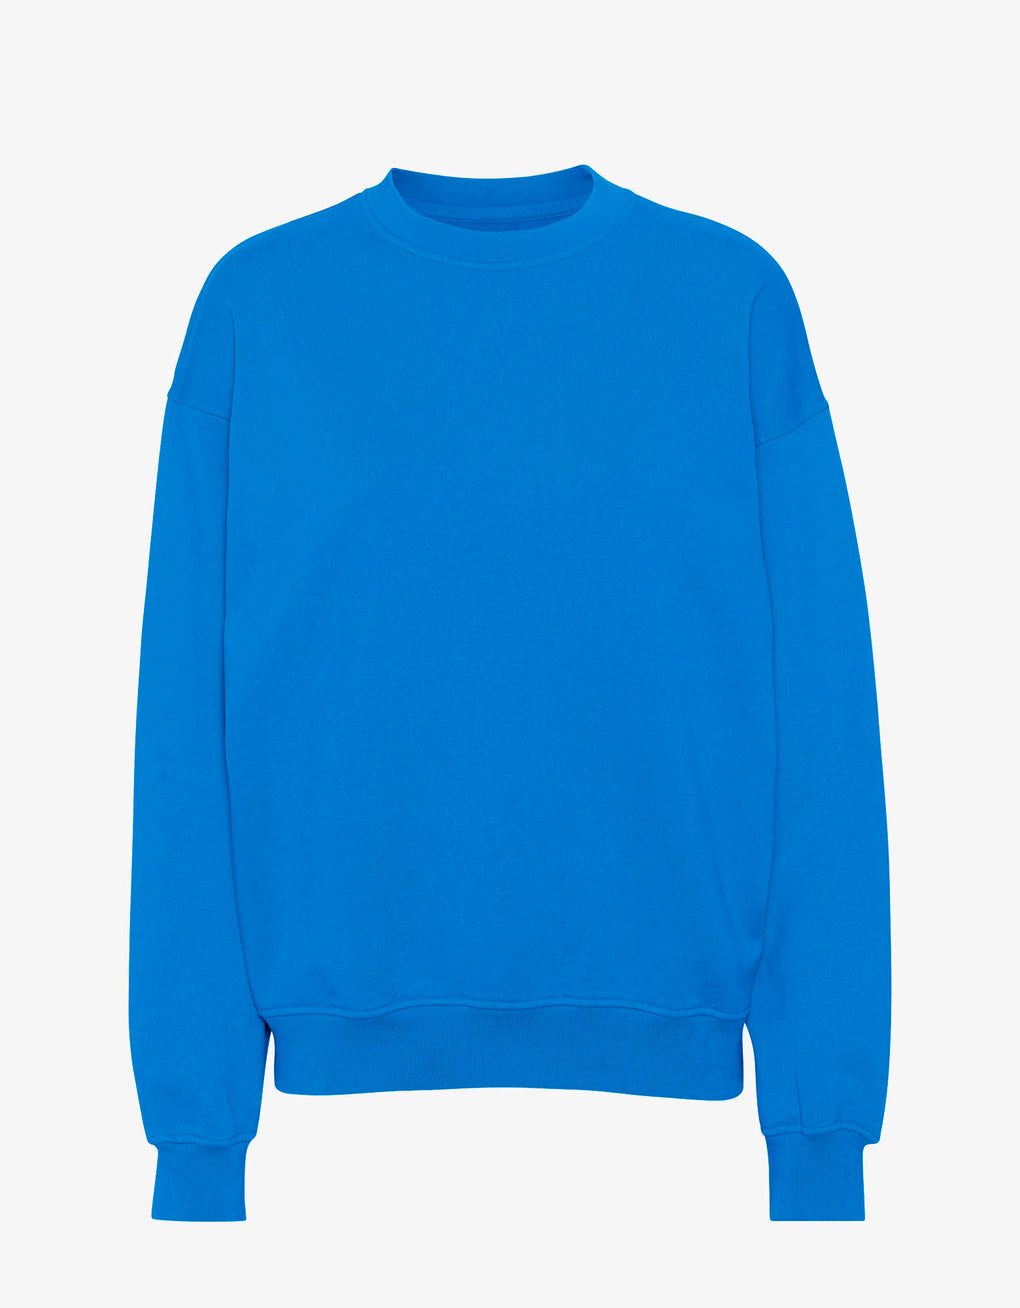 Organic oversized crew sweater in pacific blue